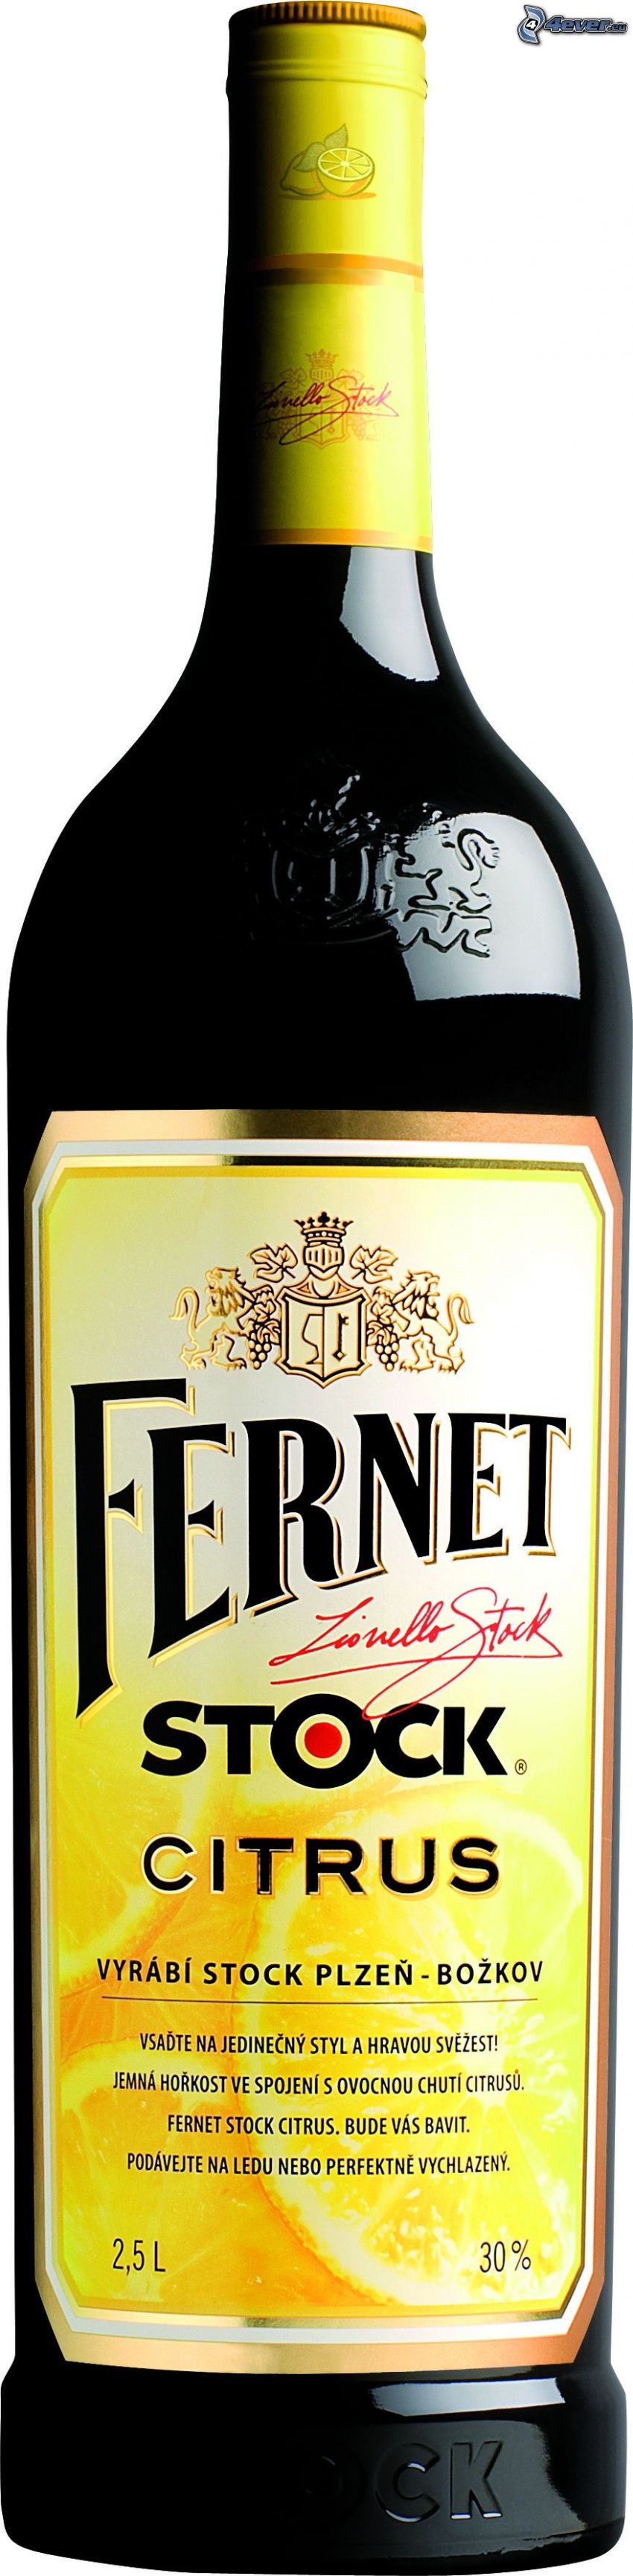 Fernet Stock Citrus, bottiglia, alcool